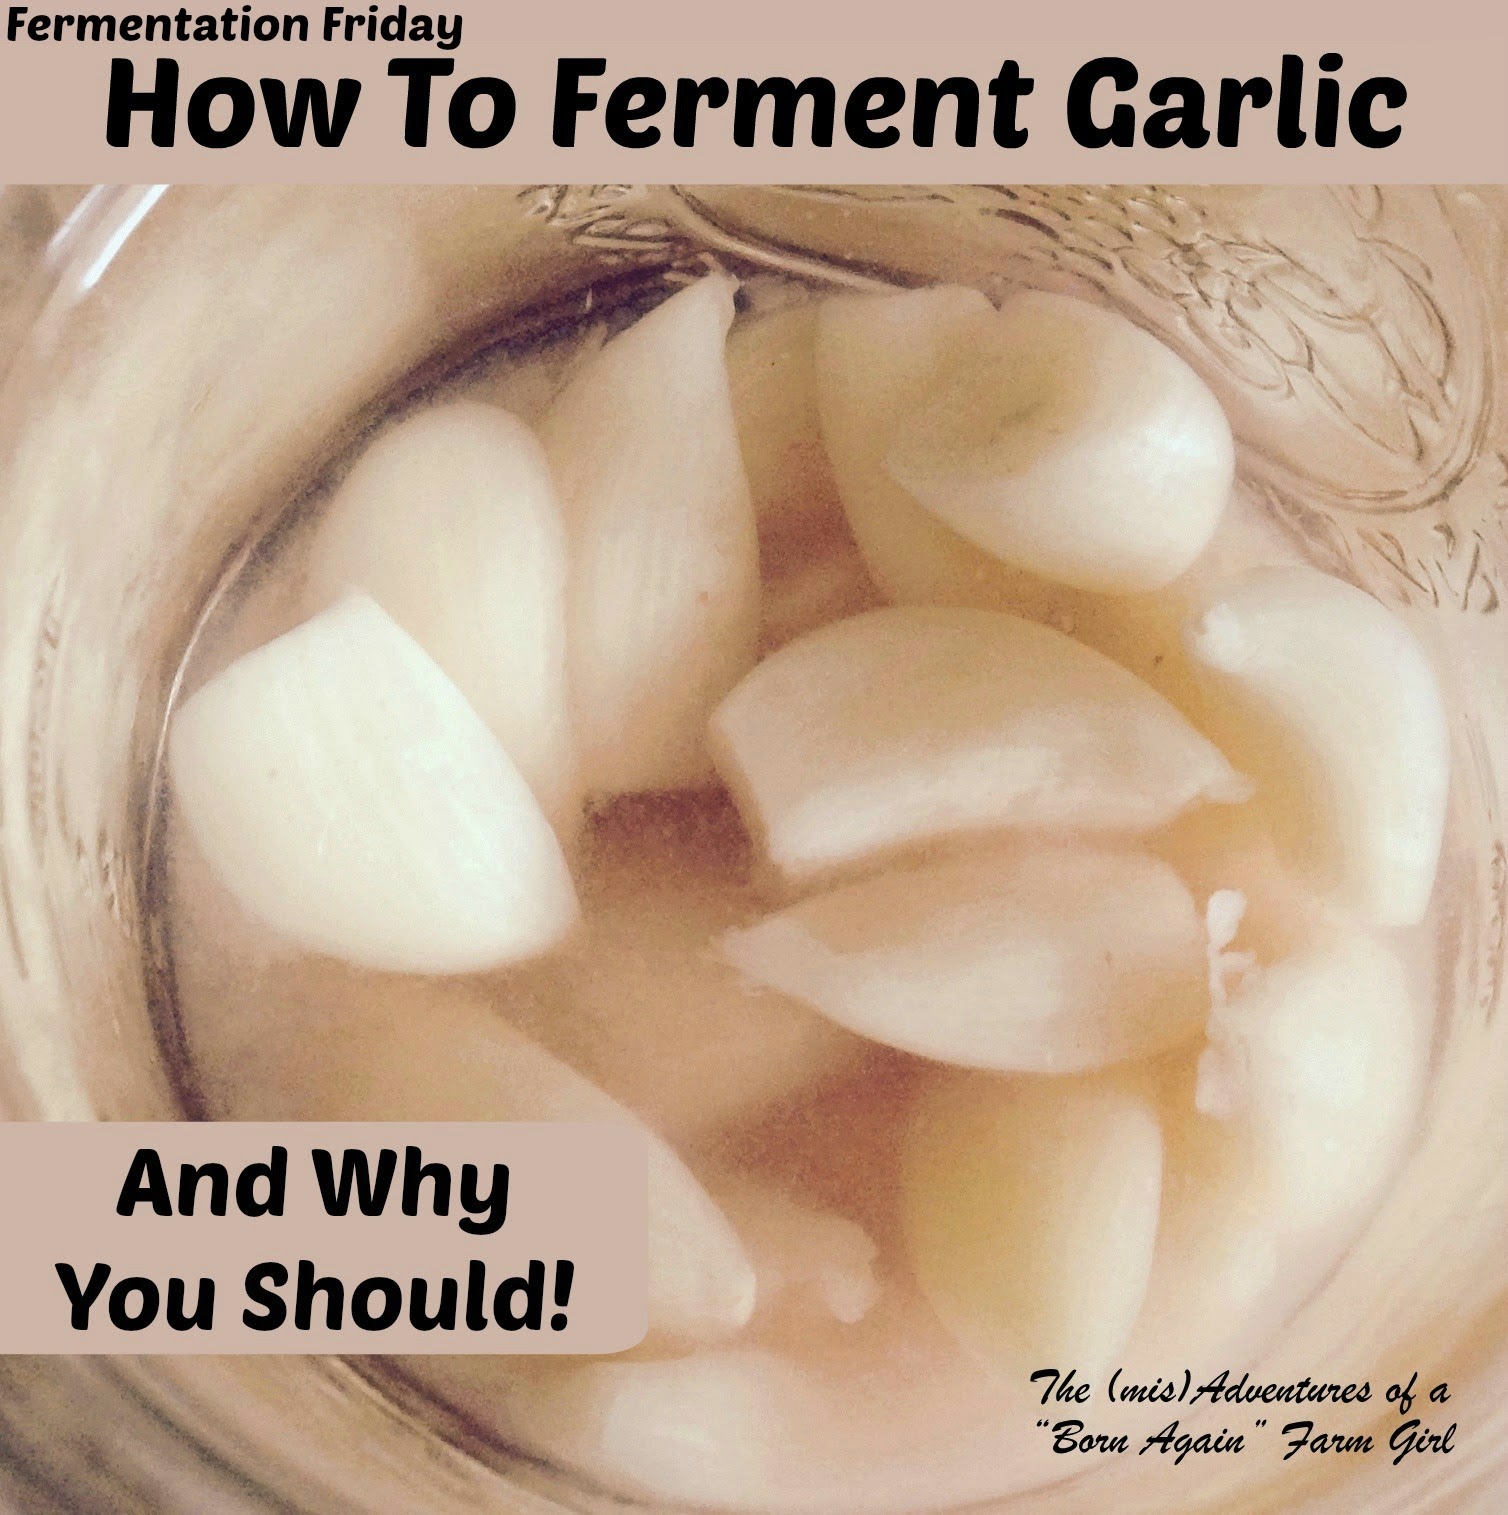 http://bornagainfarmgirl.blogspot.com/2015/01/fermentation-friday-how-to-ferment.html